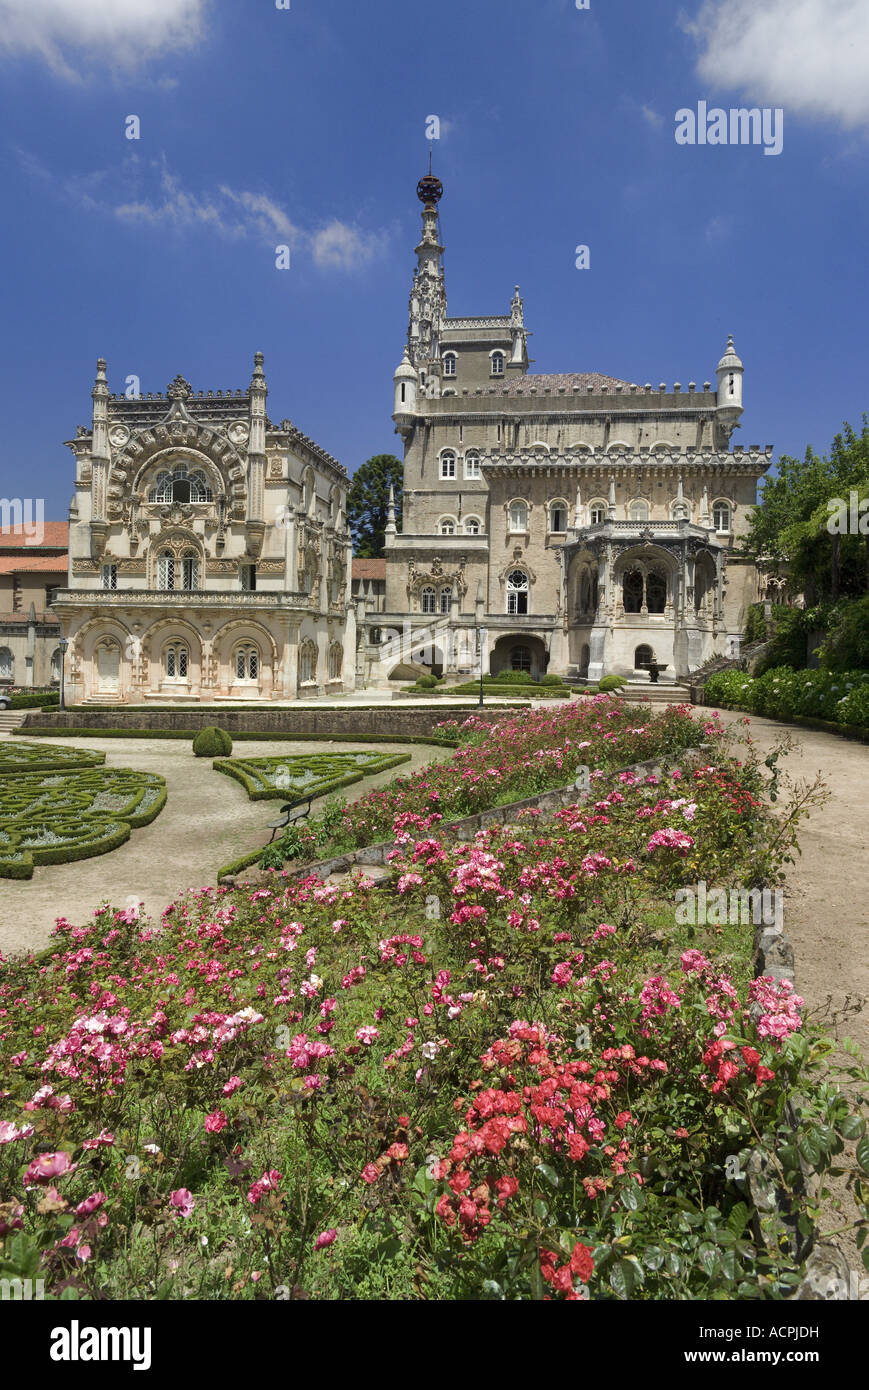 Palacio de Bucaco und Gärten in der Nähe von Coimbra, Zentral-Portugal Stockfoto